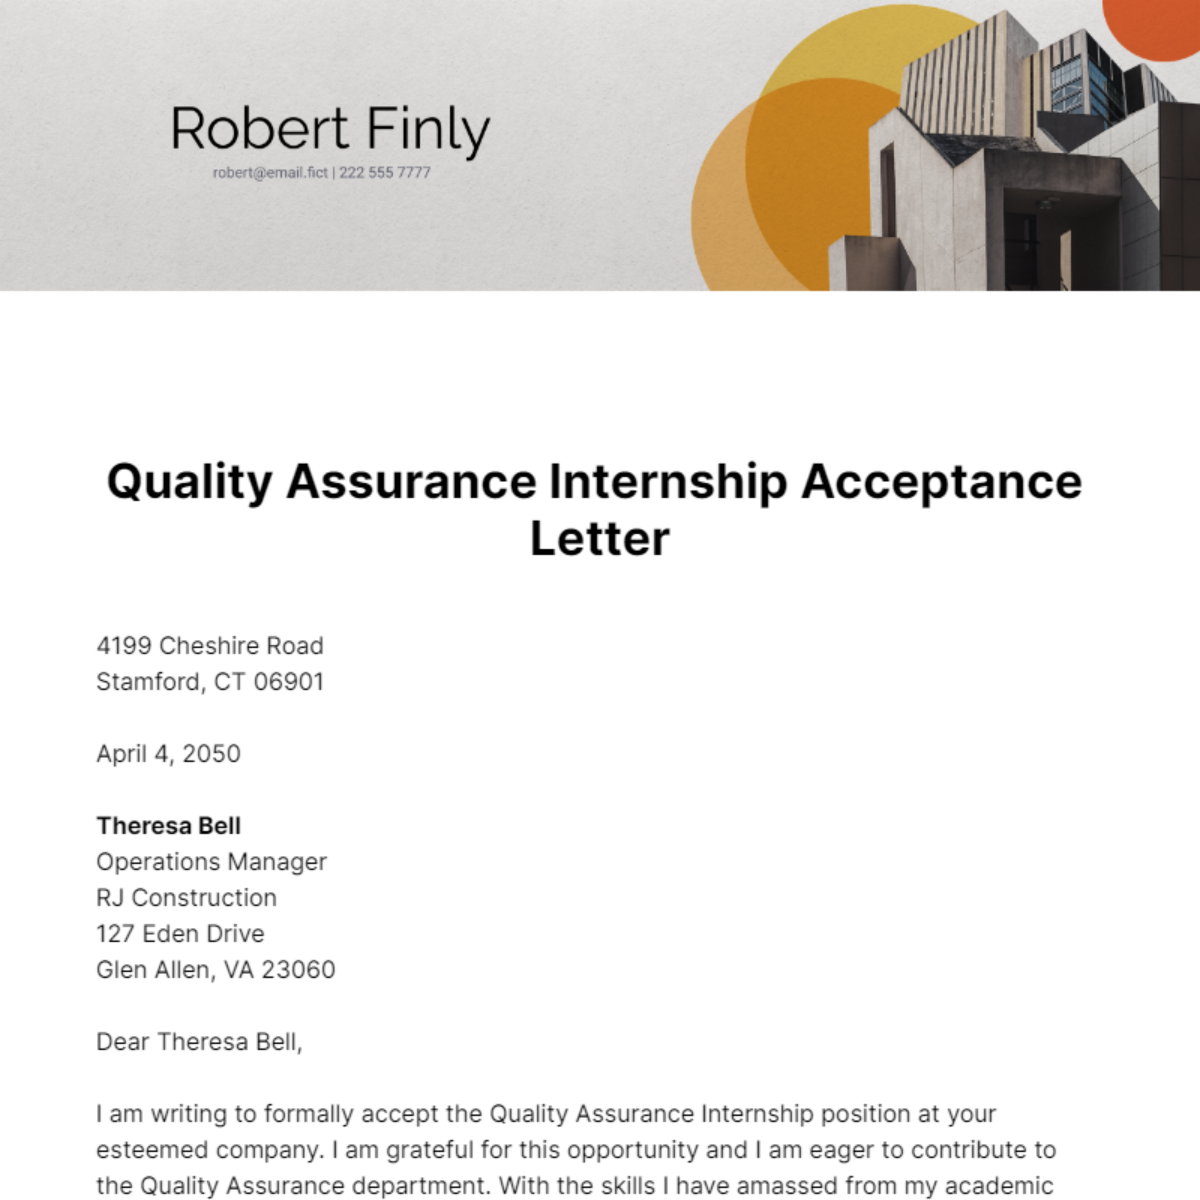 Quality Assurance Internship Acceptance Letter Template